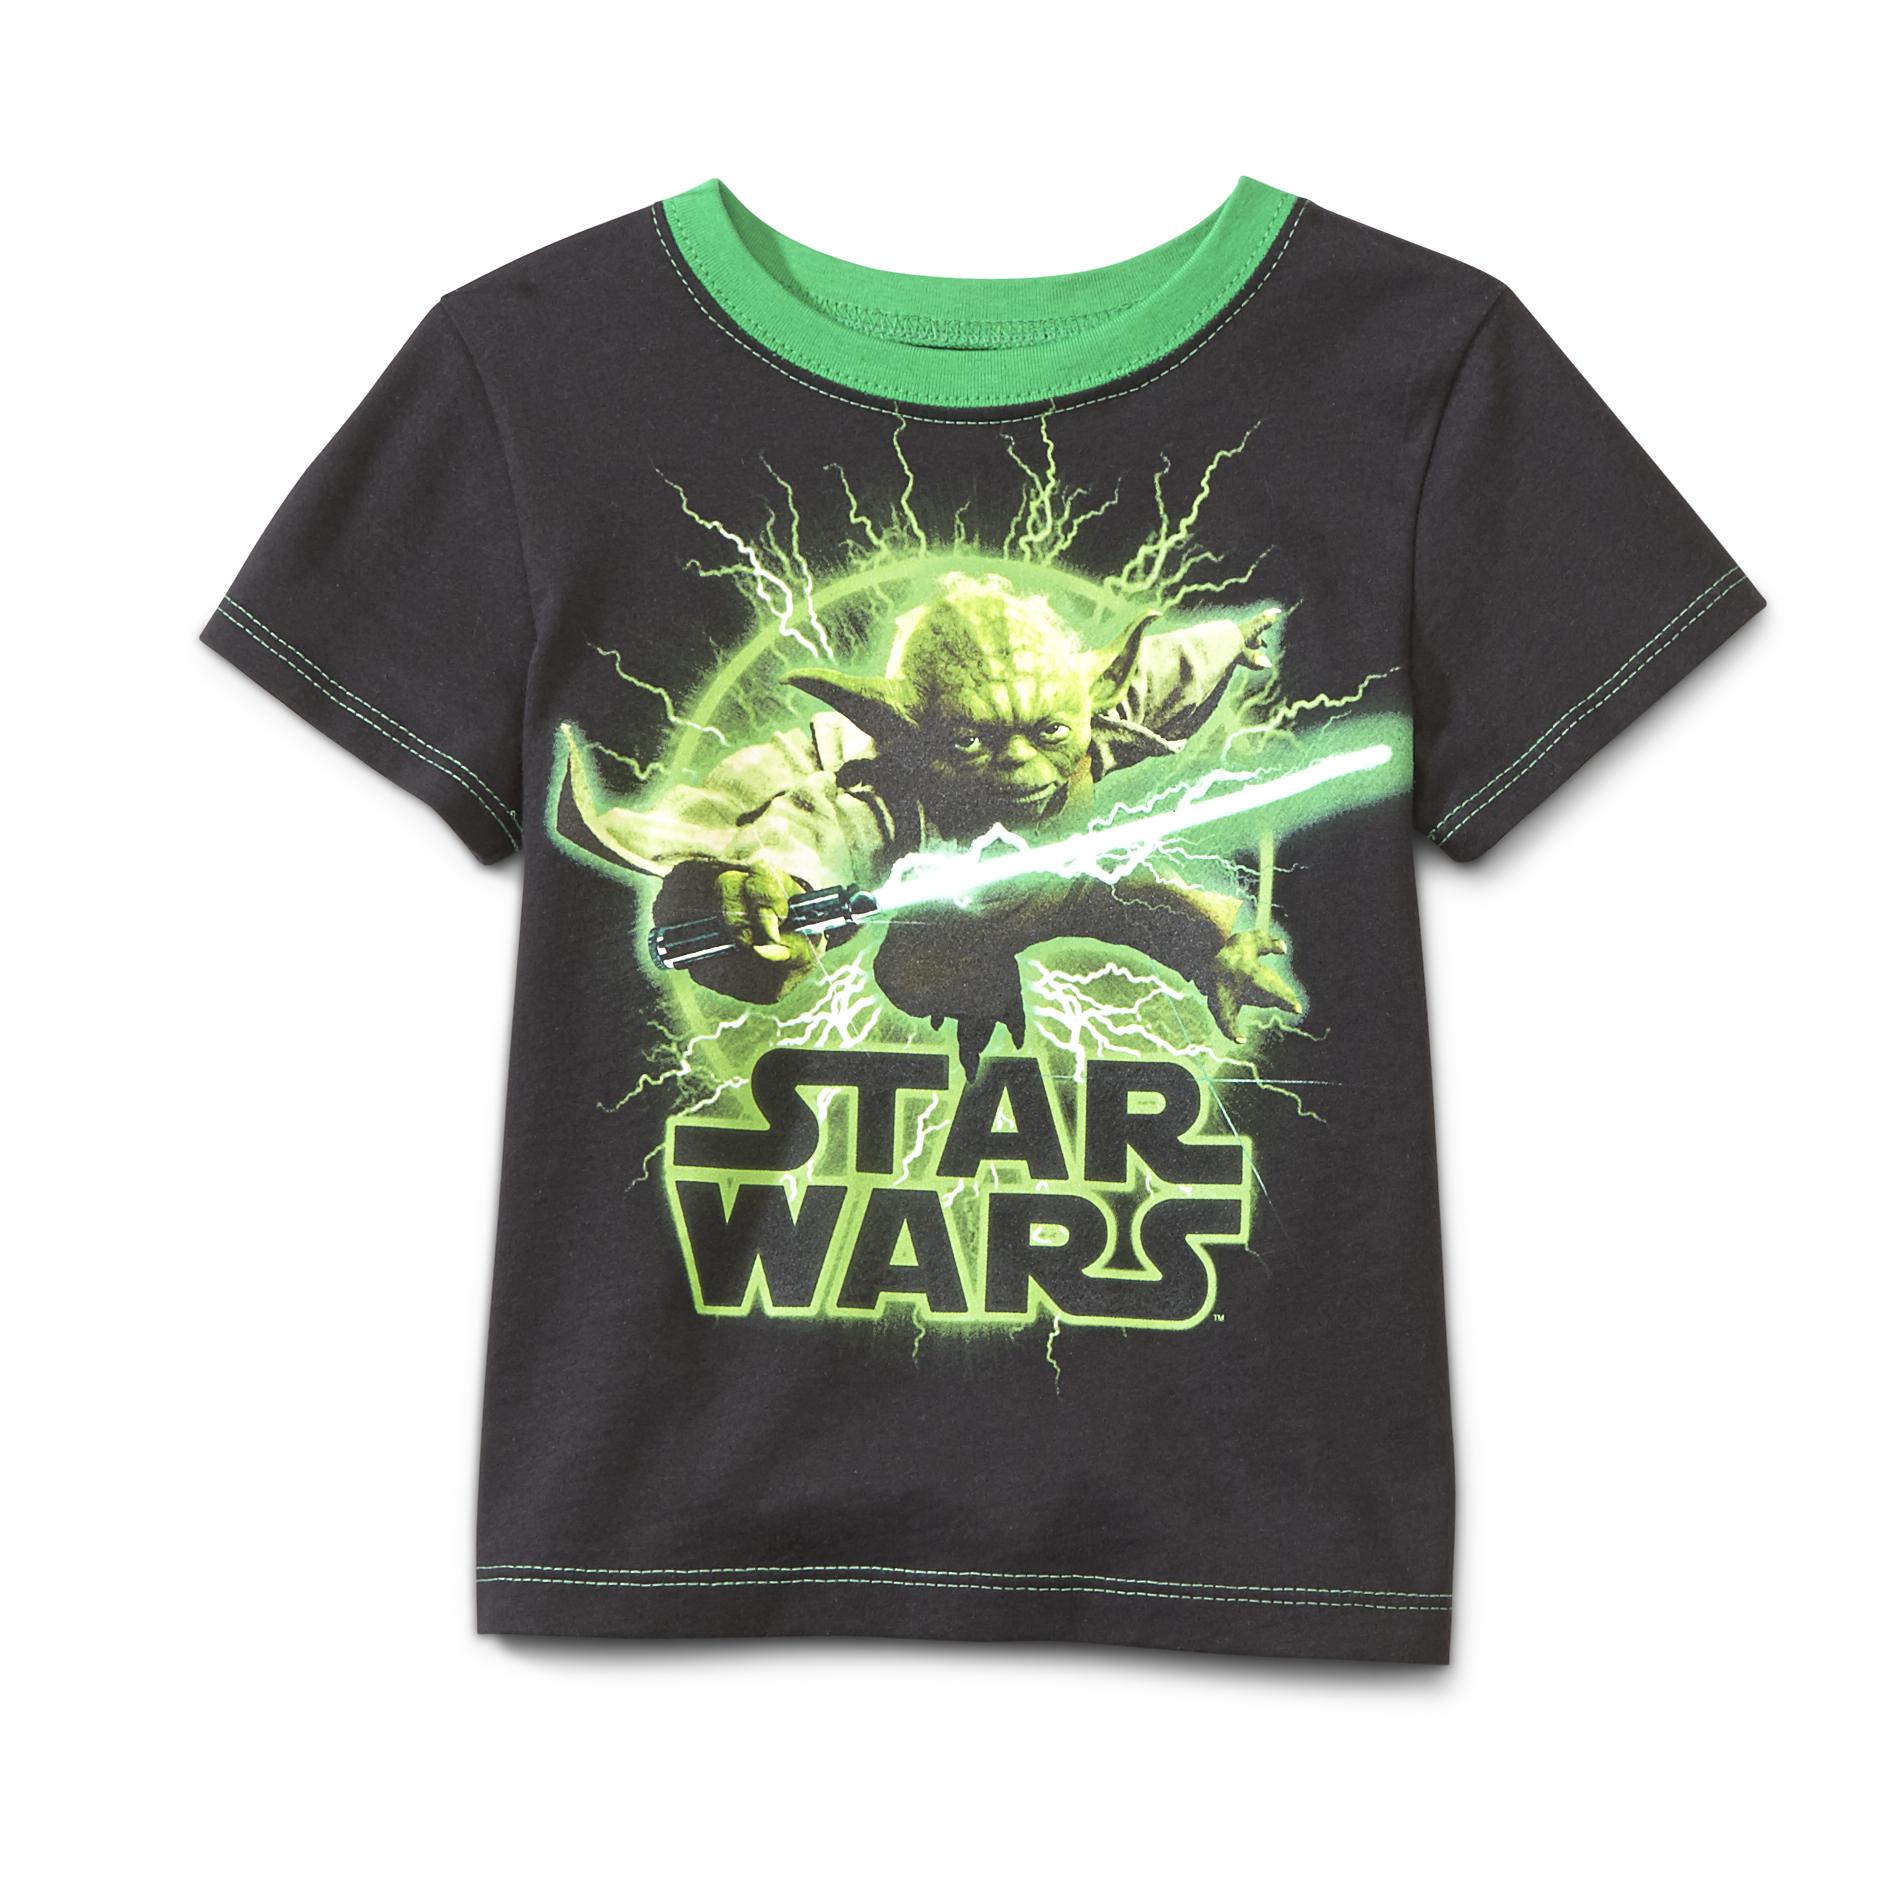 Star Wars Toddler Boy's Graphic T-Shirt - Yoda